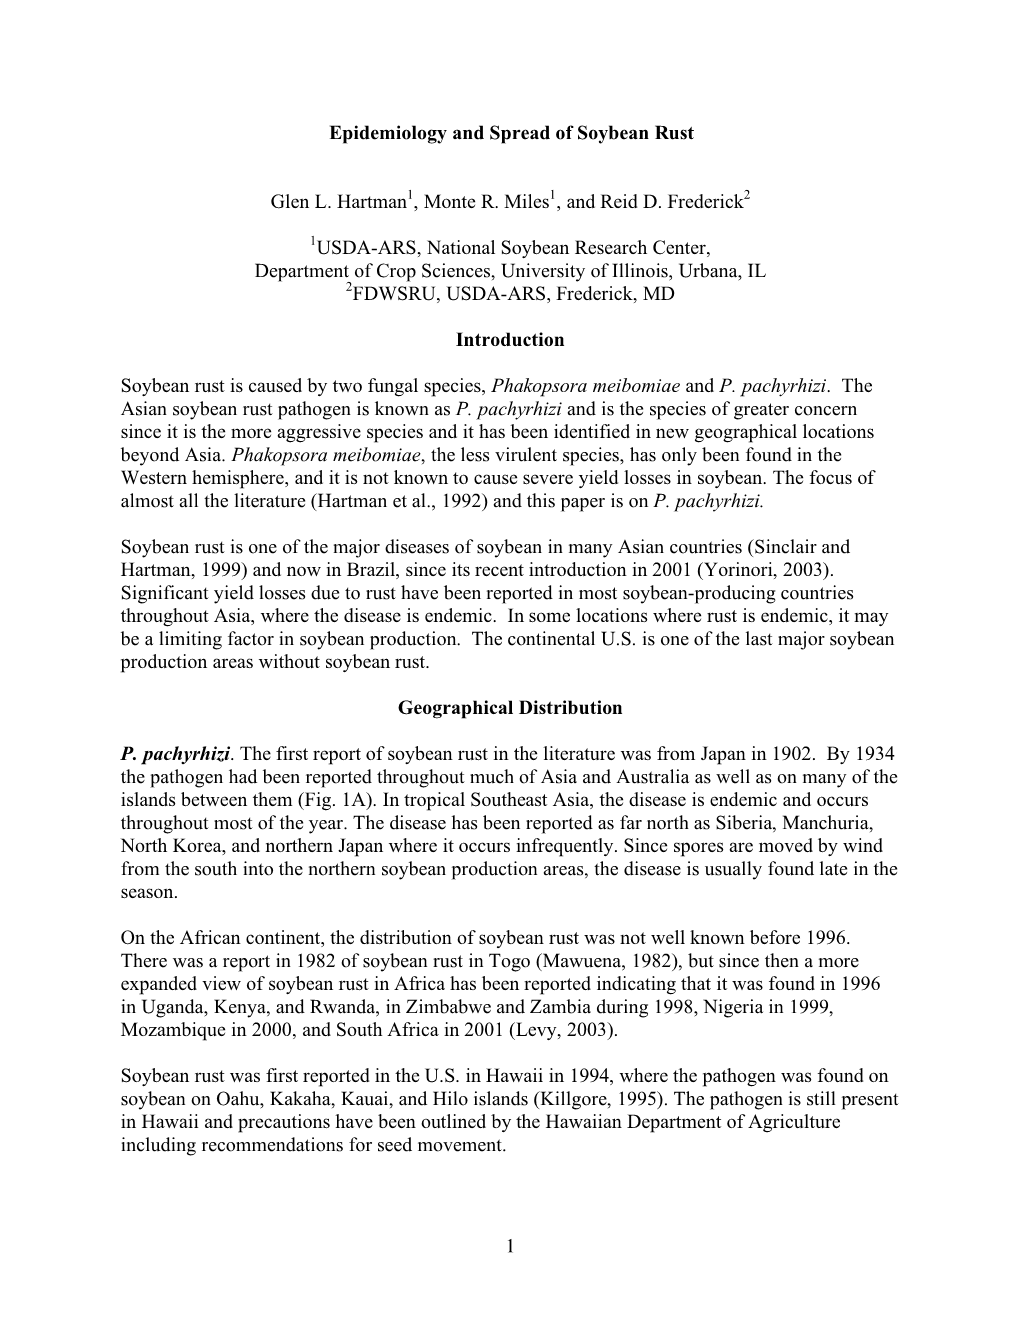 1 Epidemiology and Spread of Soybean Rust Glen L. Hartman1